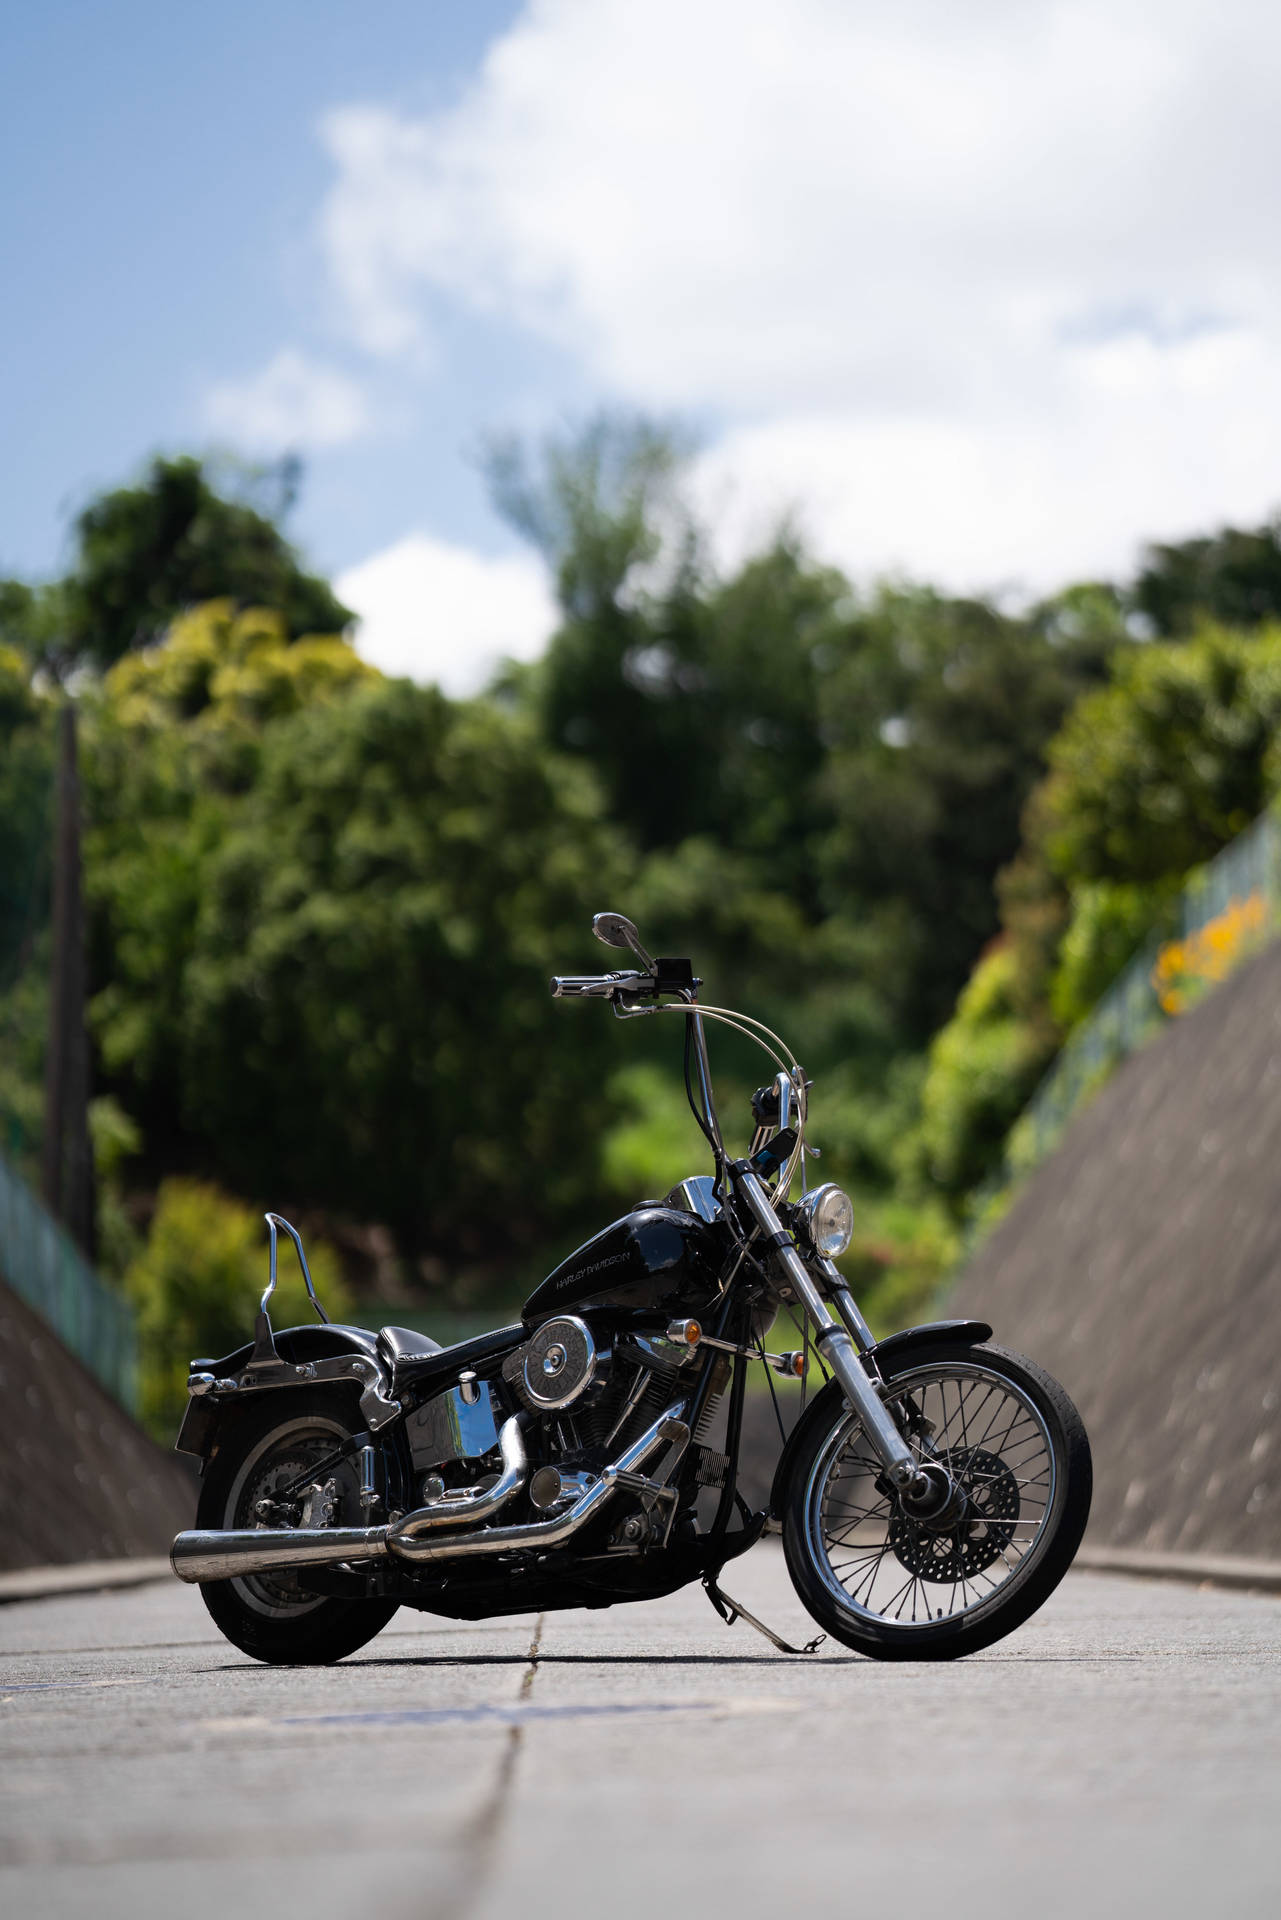 Harley Davidson 4098X6143 Wallpaper and Background Image